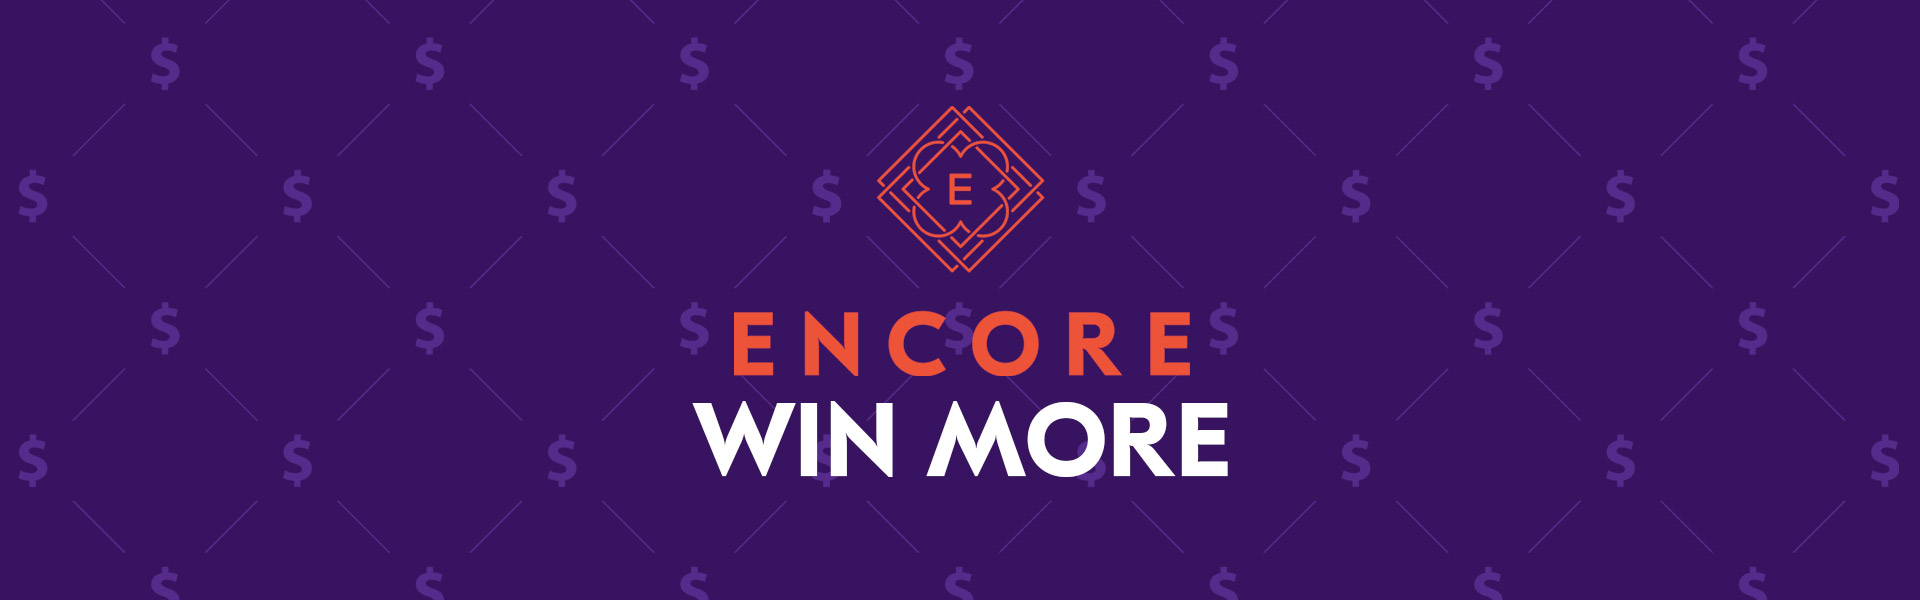 Encore-Incentive-Website-Promo-Banner